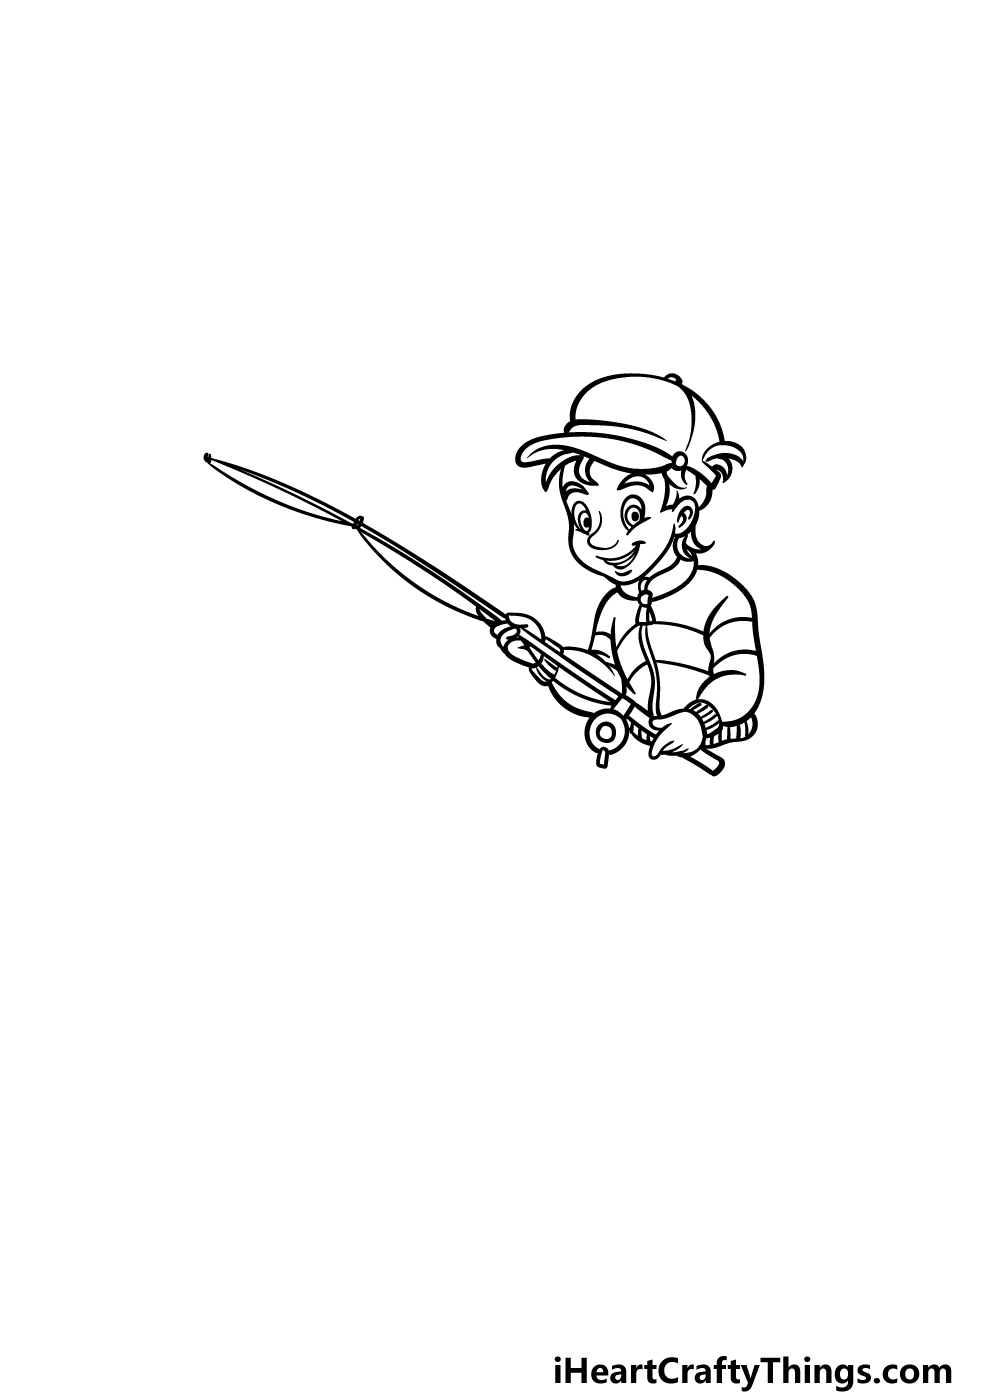 Fishing drawing